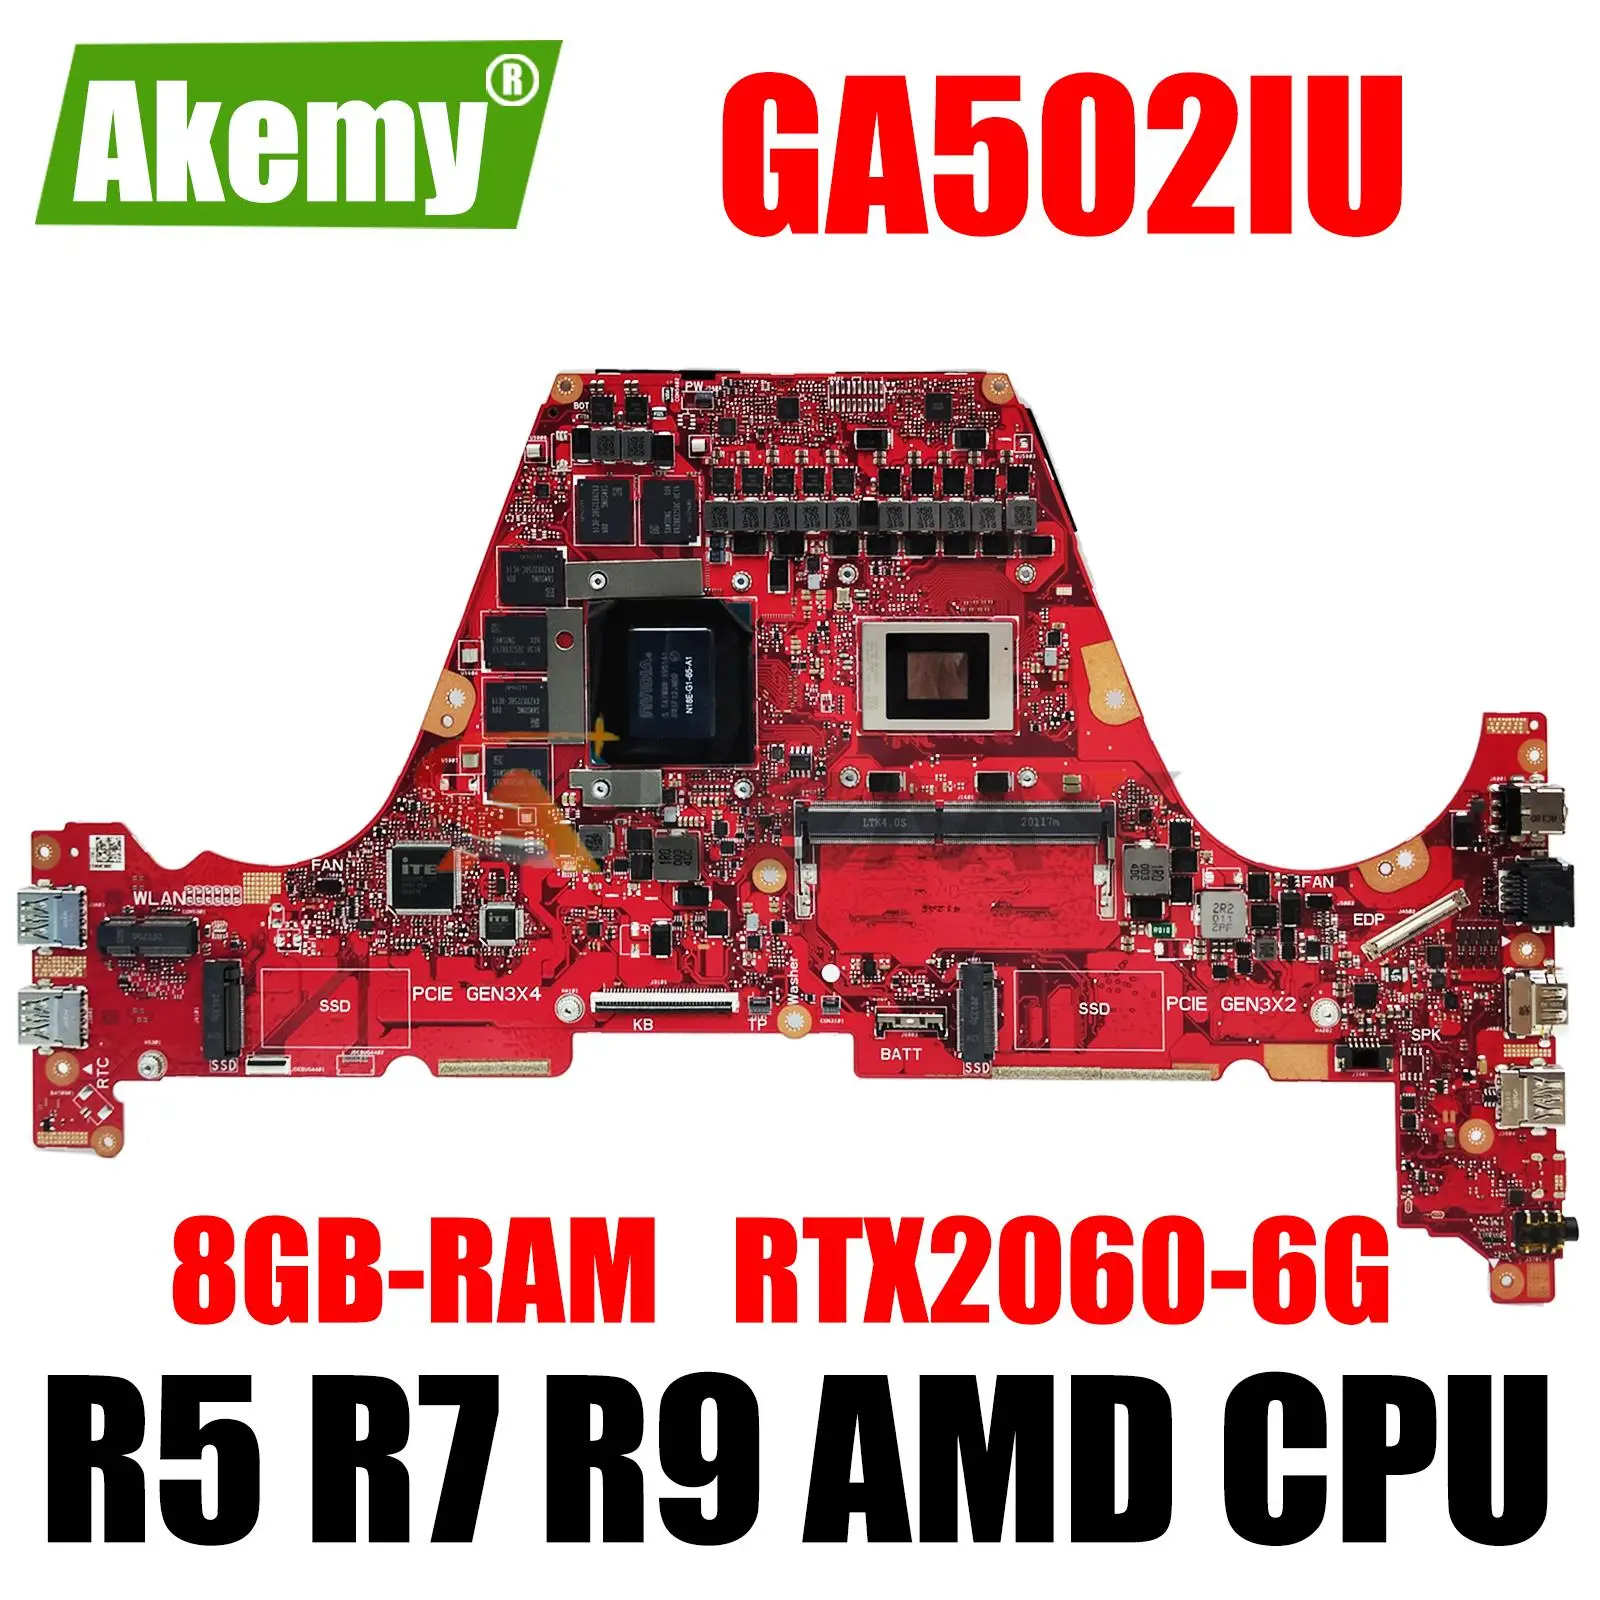 

GA502IU Laptop Motherboard for ASUS GA502IU GA502IV GA502 Notebook Motherboard Mainboard RTX2060-6G GPU R5 R7 R9 AMD CPU 8GB RAM